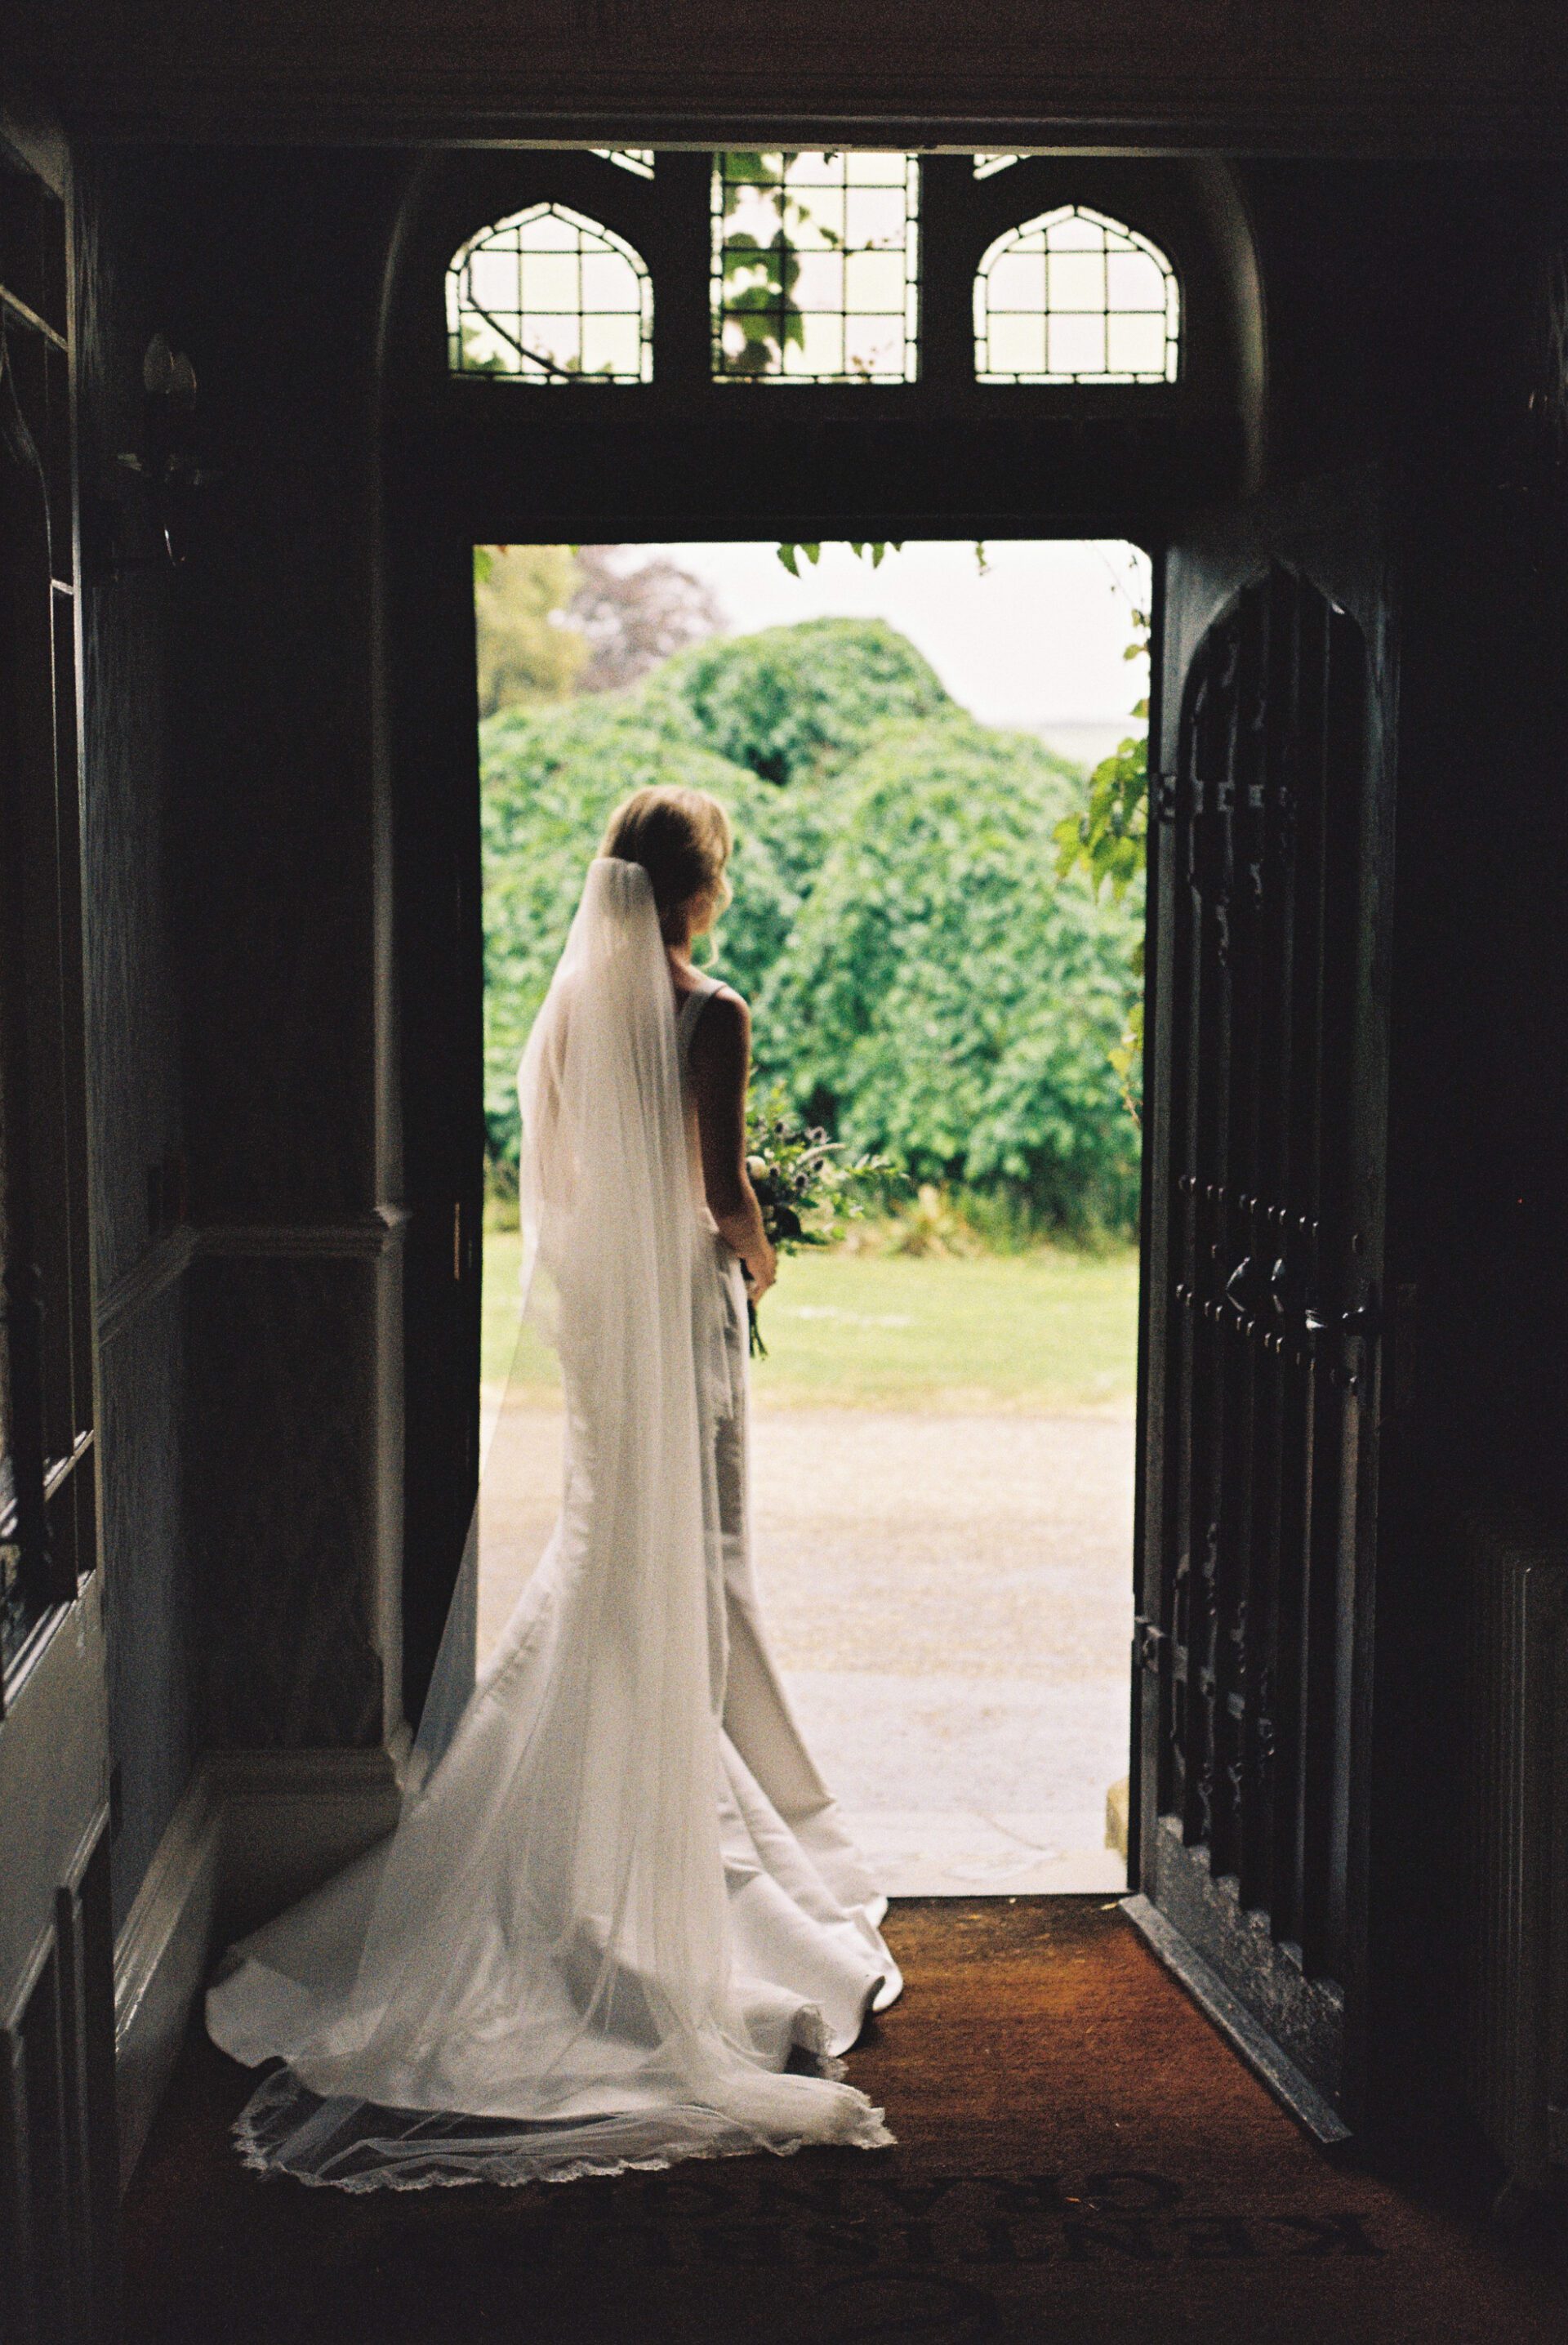 A bridal portrait captured on 35mm